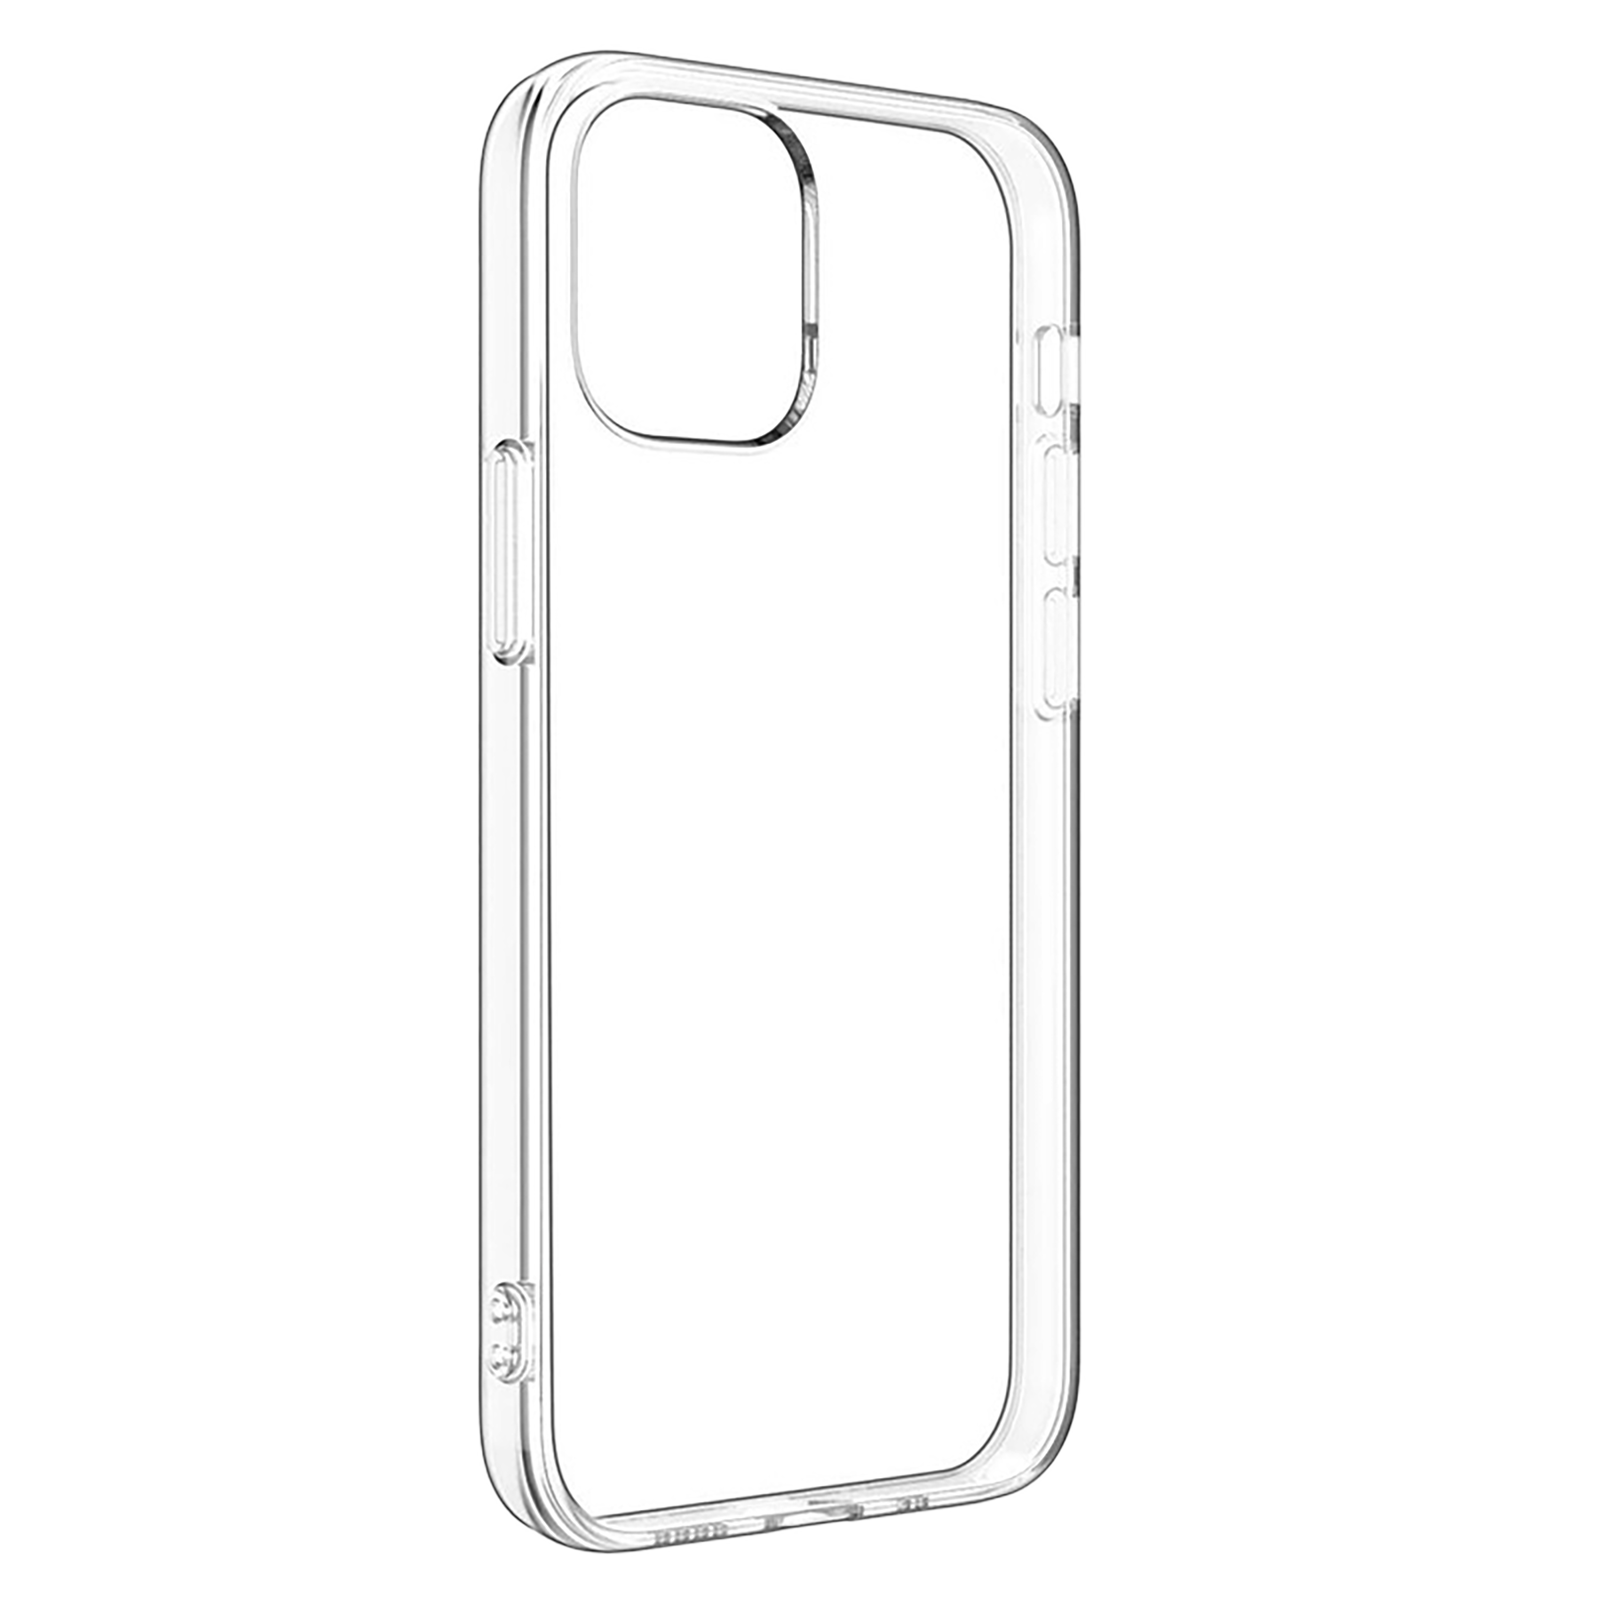 Vaku Luxos - Vaku Luxos Glassy Polycarbonate Hard Back Case For iPhone 13 Pro (Scratch Resistant, VAKU-IPH13PR-GLSYCLR, Clear)